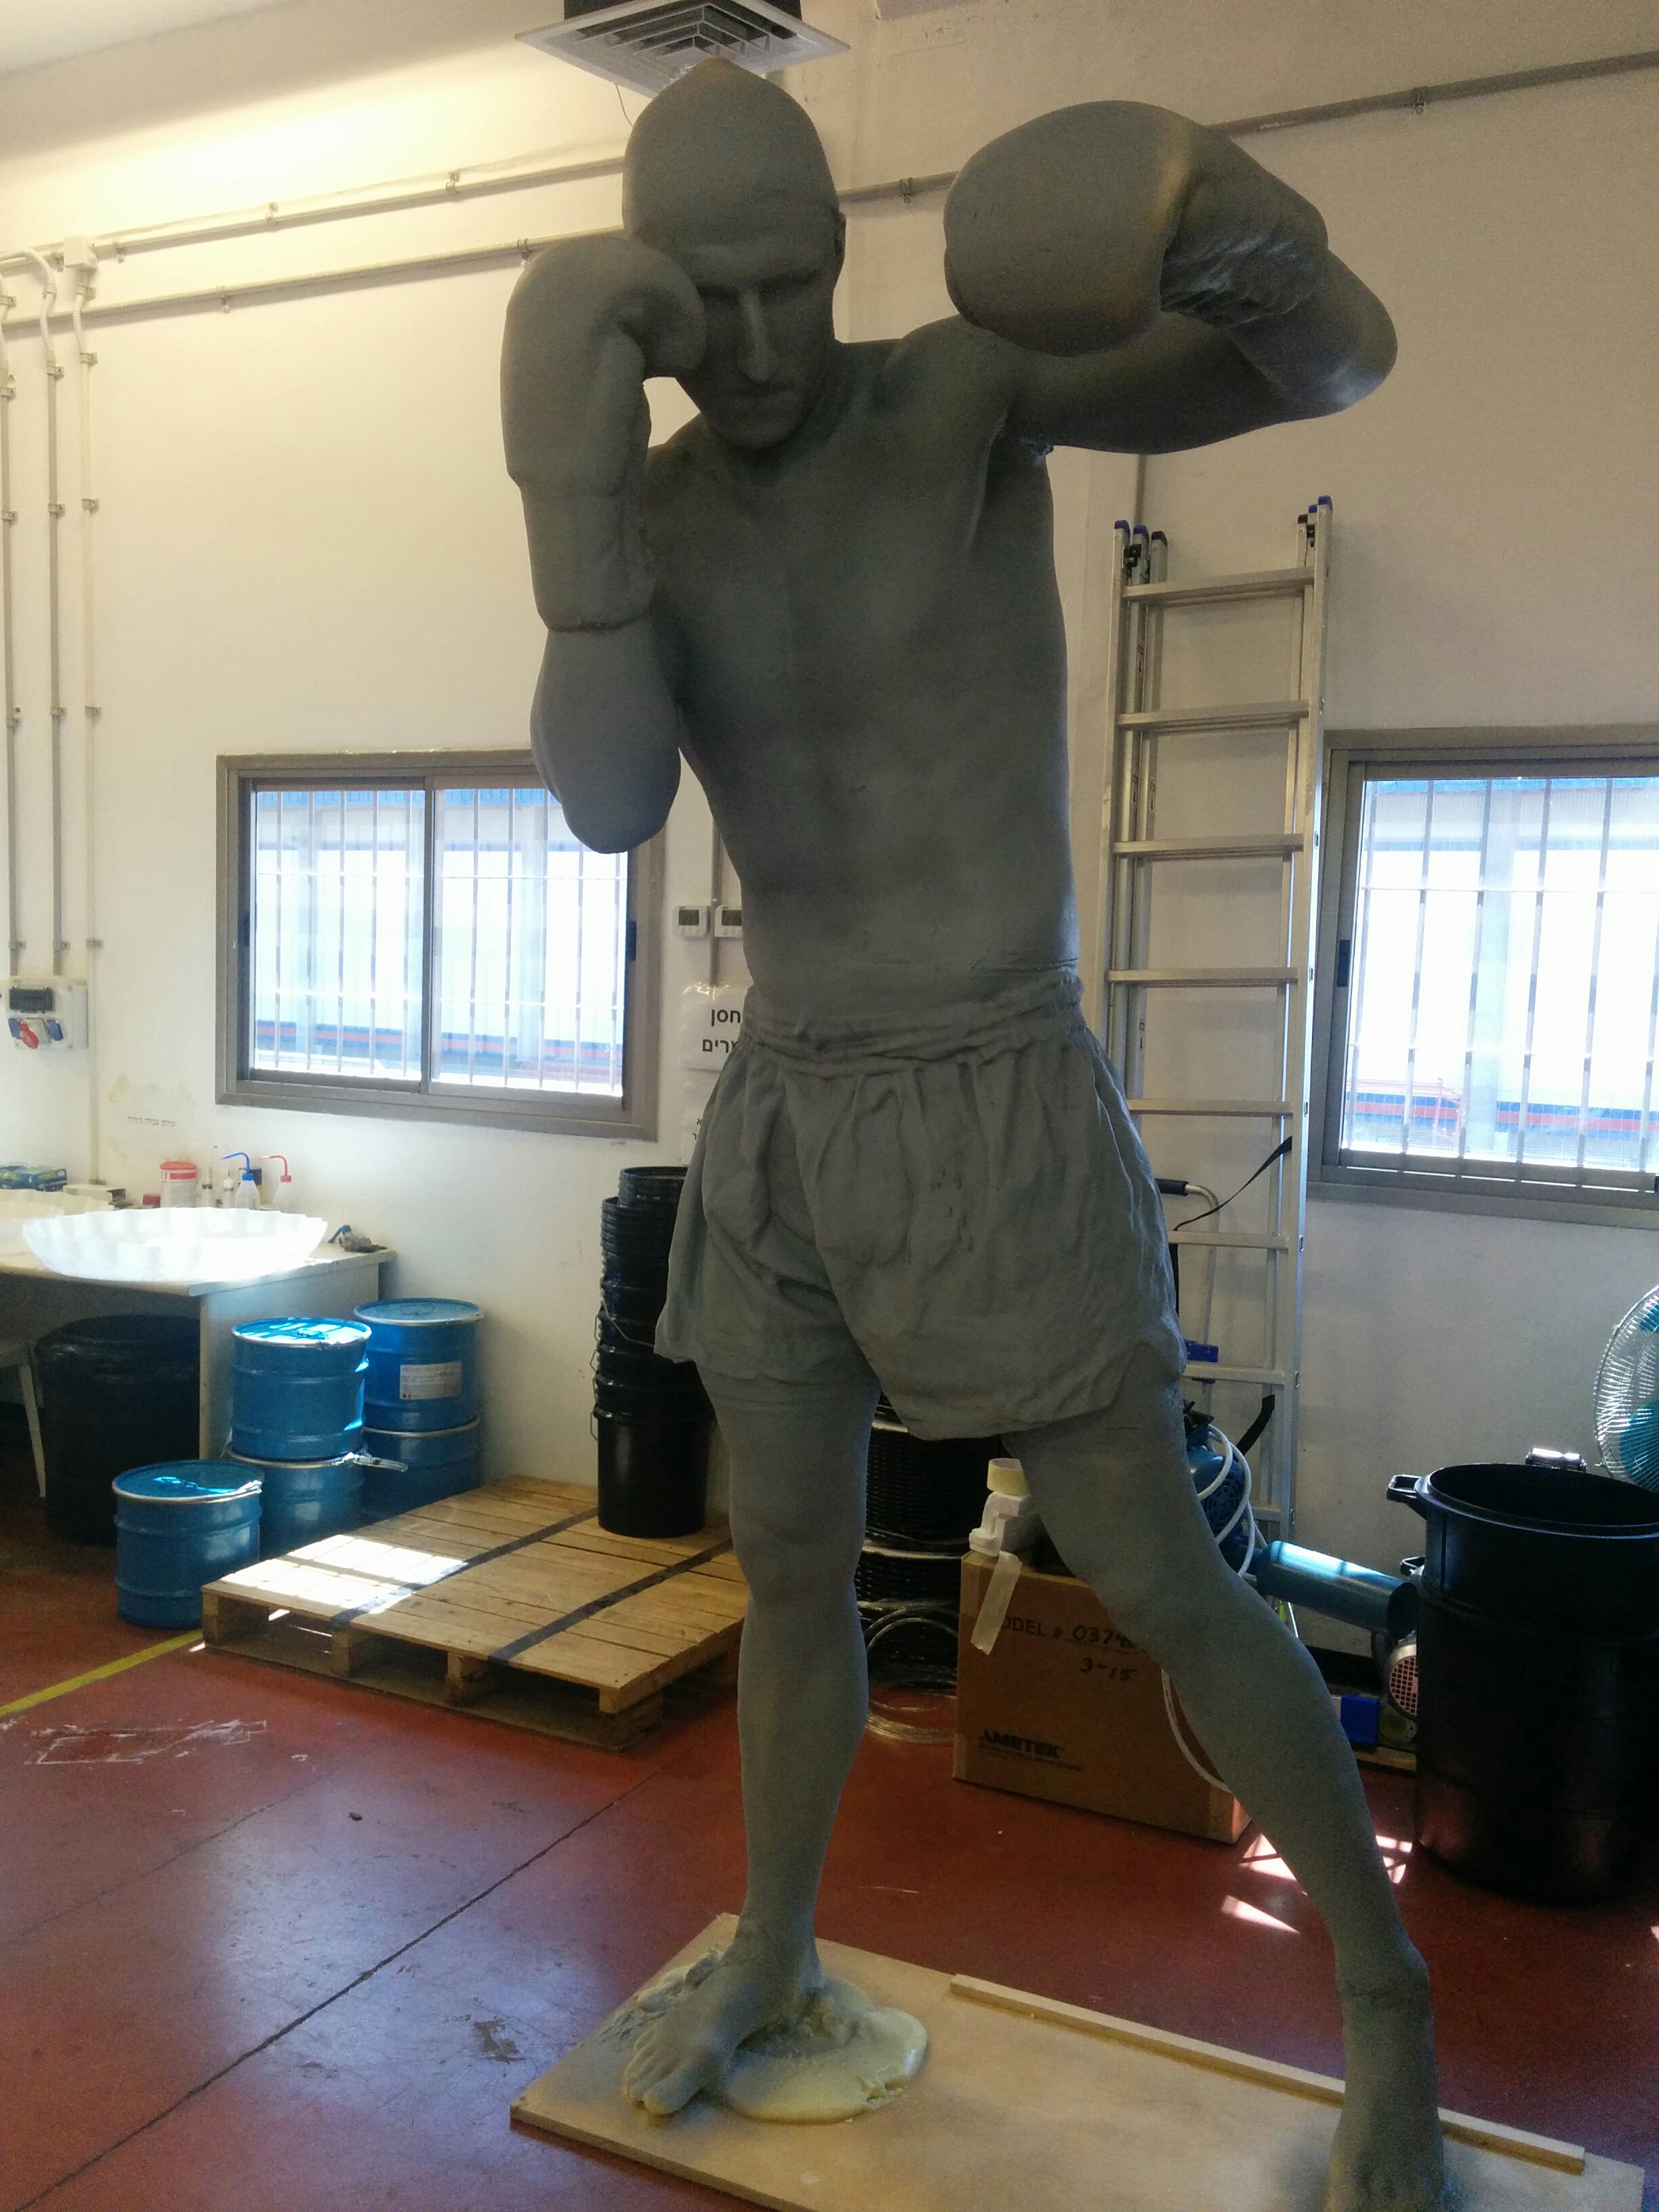  A full-size boxing figurine 3D printed on Massivit's large-format 3D printer 